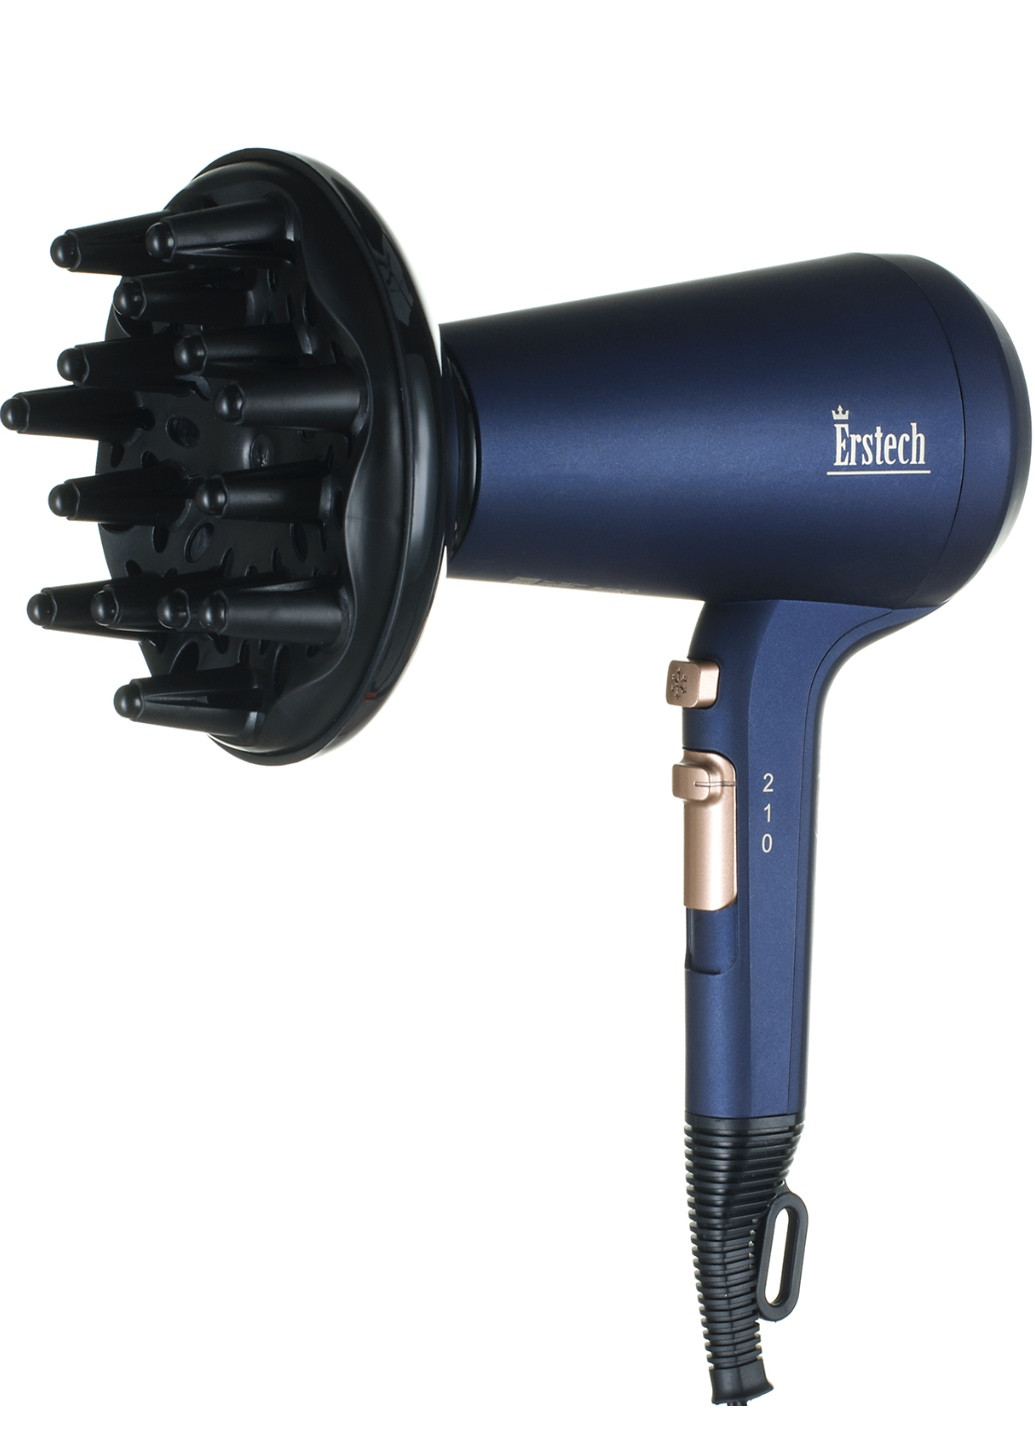 Фен электрический для сушки и укладки волос 220 В; арт.HD220/02ER; т.м. Erstech hd220/02er_blue (197140490)